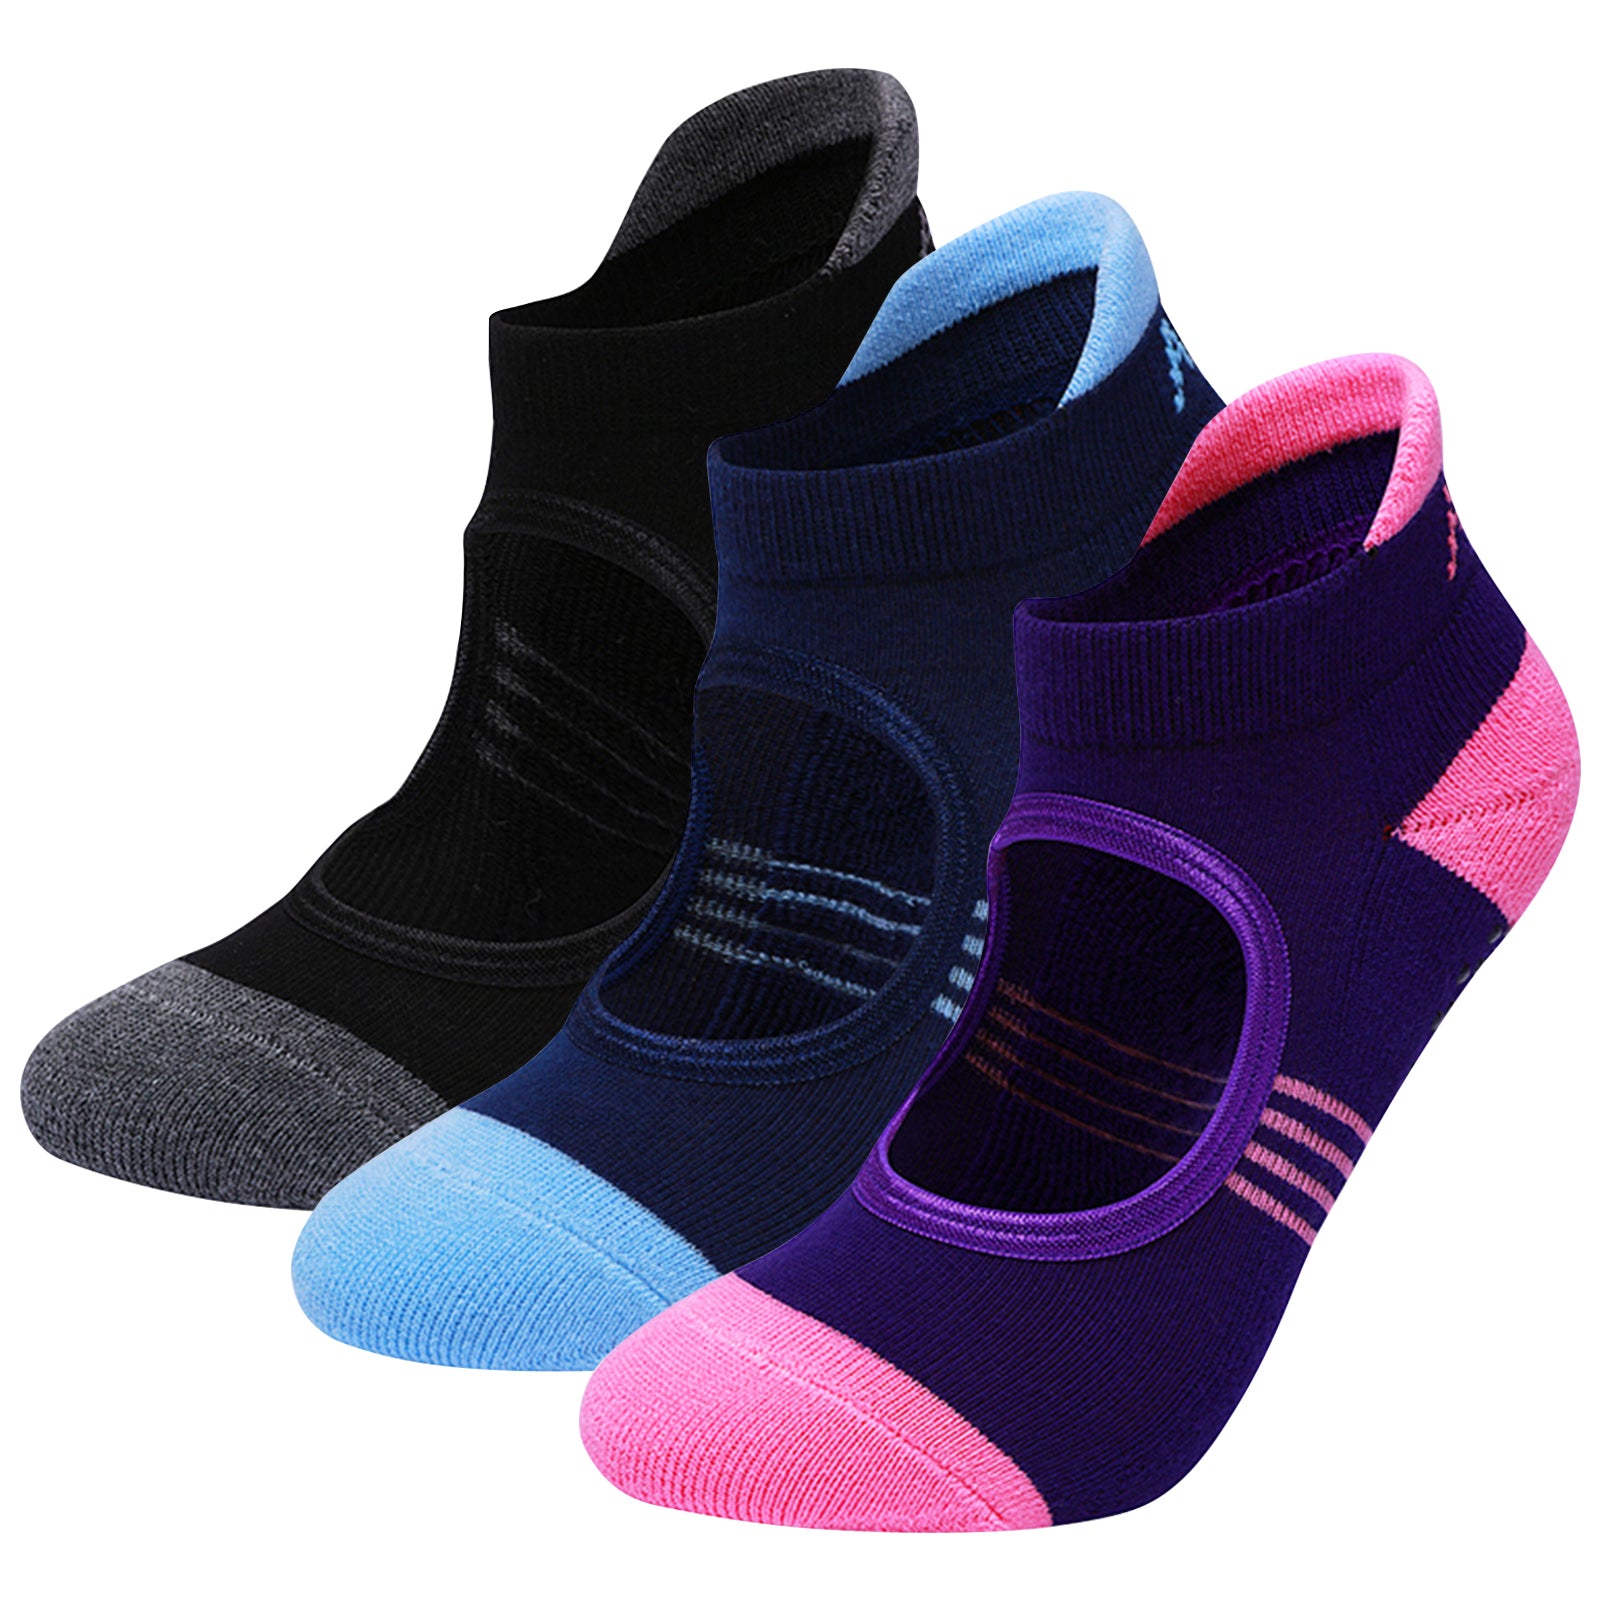 Artfasion's Women's Yoga Socks for Enhanced Stability and Grip